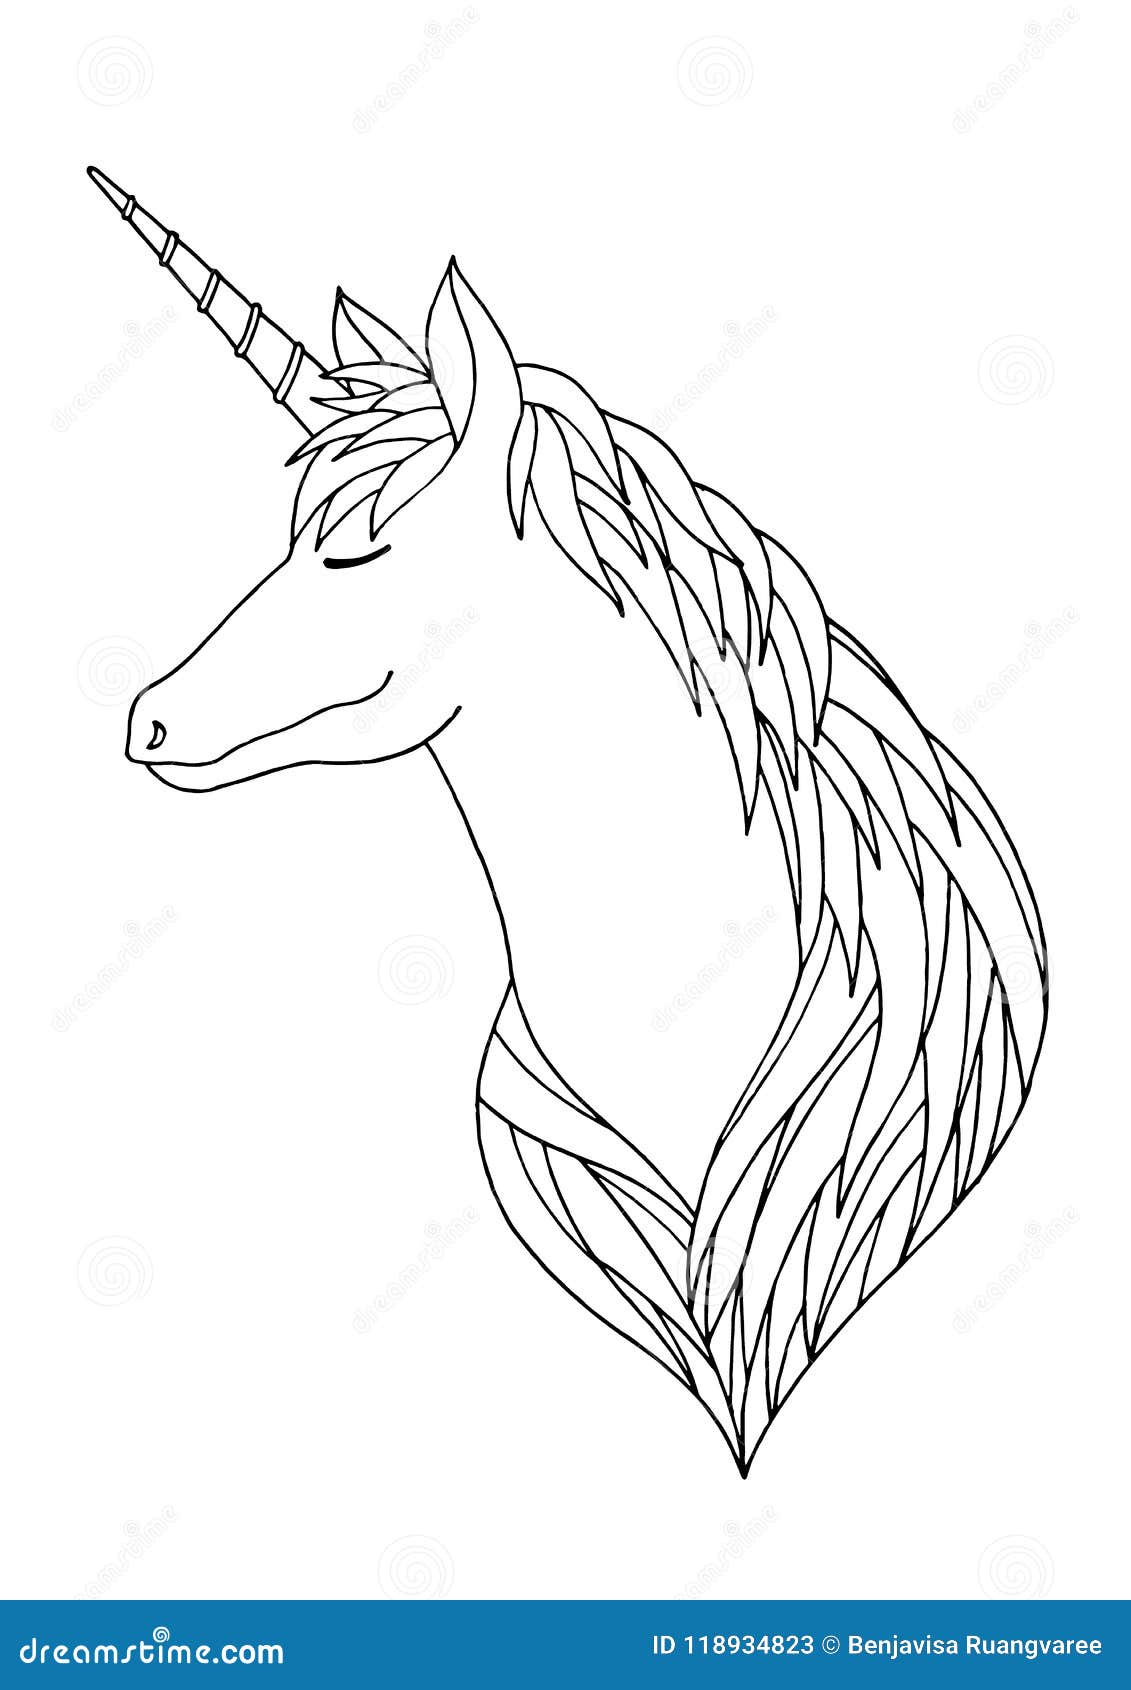 unicorn hand drawing sketck doodle fantasy   